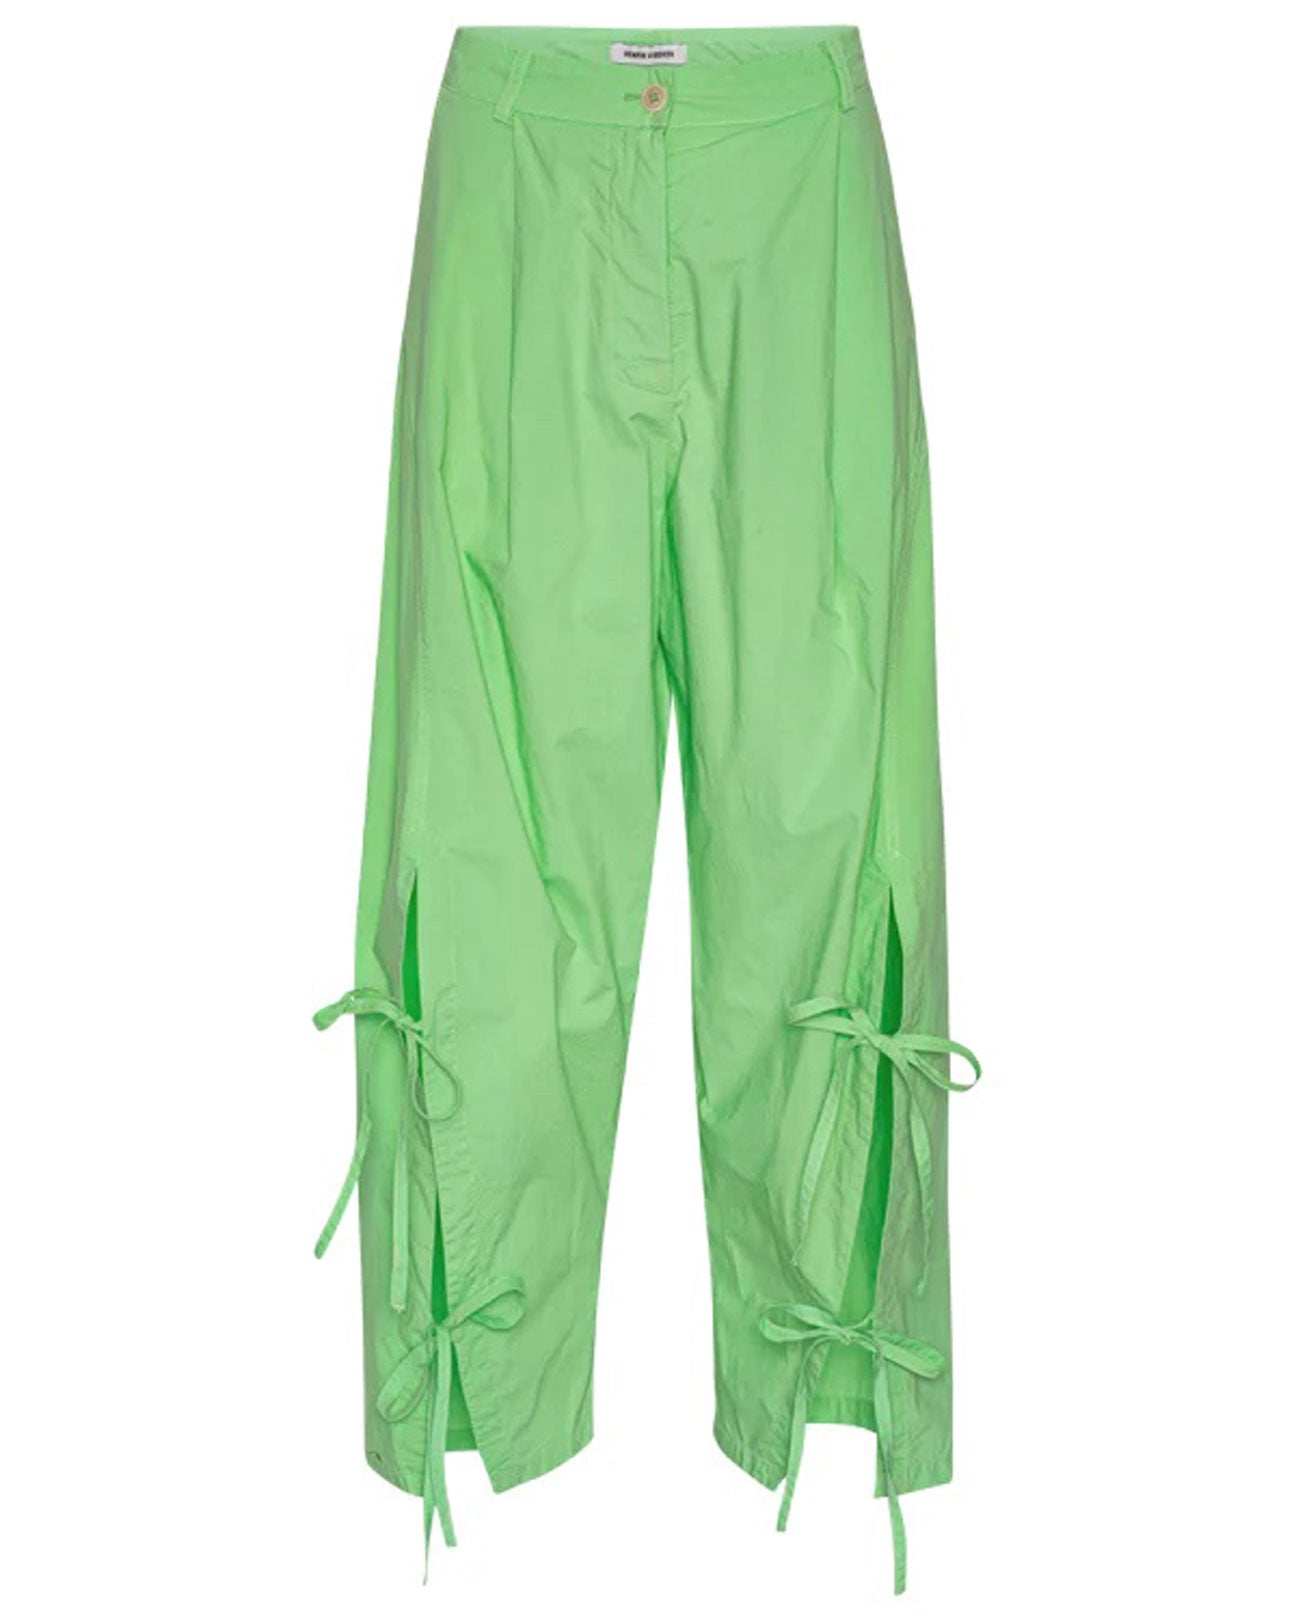 HENRIK VIBSKOV Siesta Pants in Summer Green available at Lahn.shop